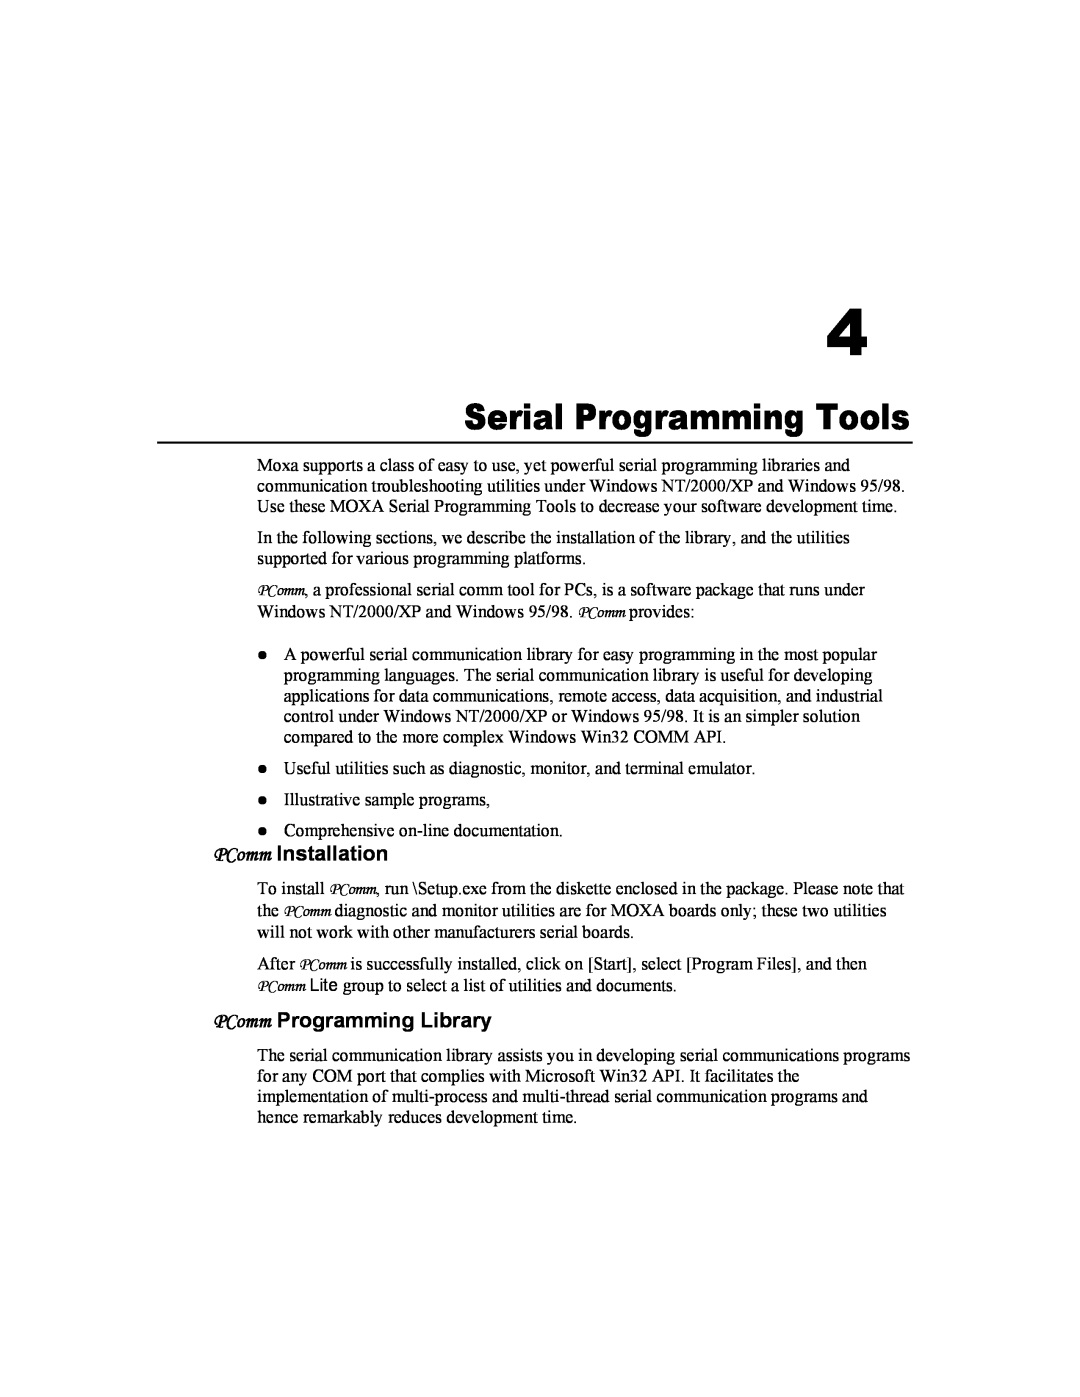 Moxa Technologies CP-168U user manual Serial Programming Tools, PComm Installation, PComm Programming Library 